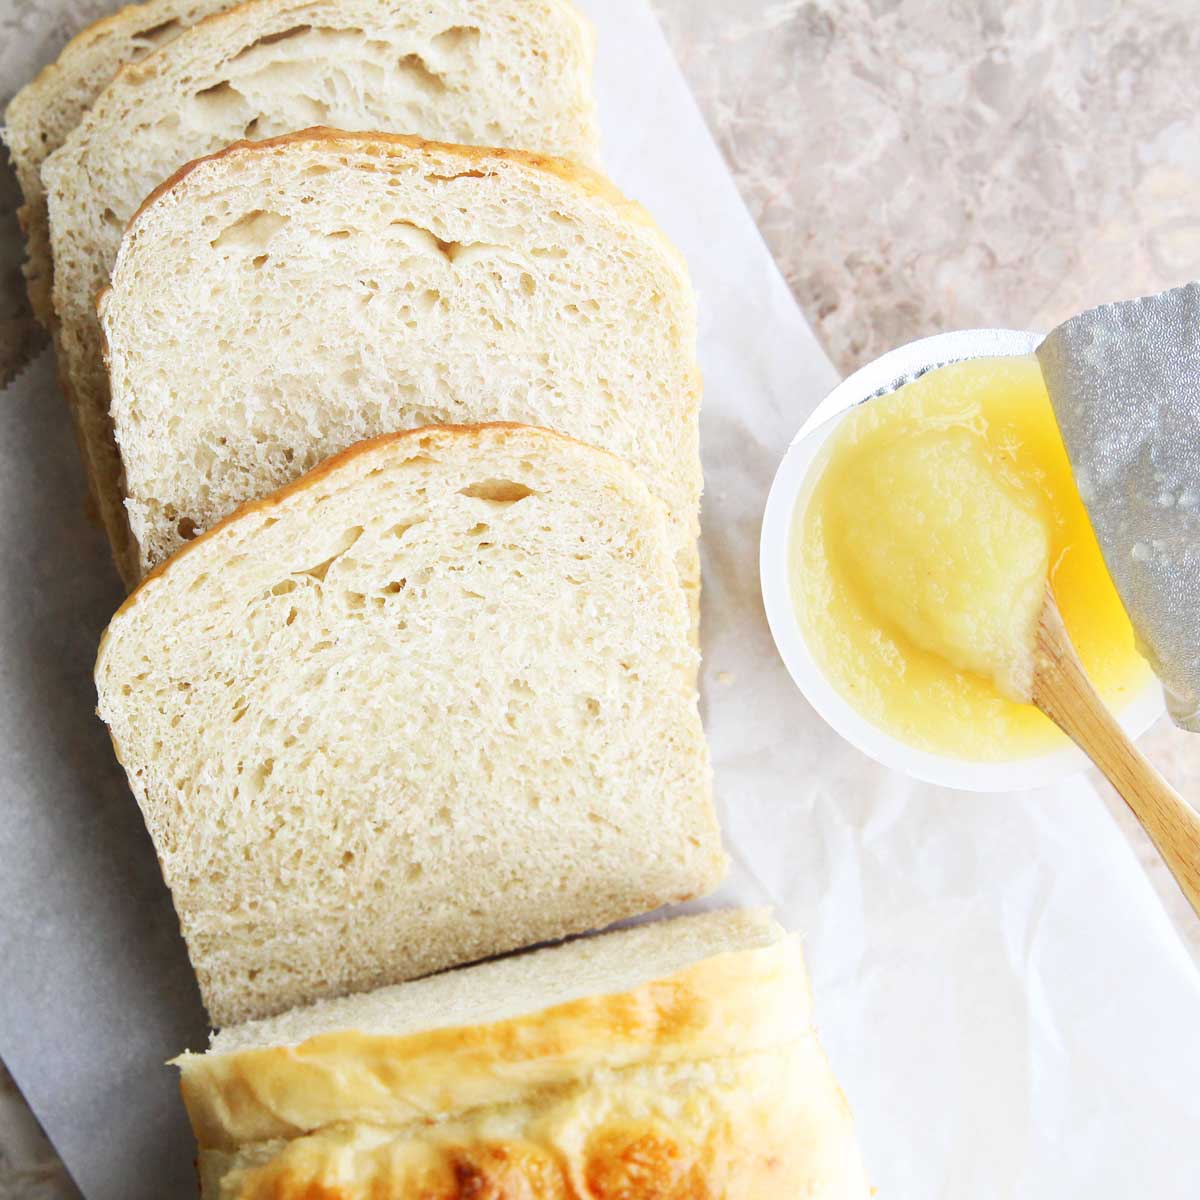 Applesauce Yeast Bread (A Healthier Recipe for White Bread) - Pecan Pie Bars